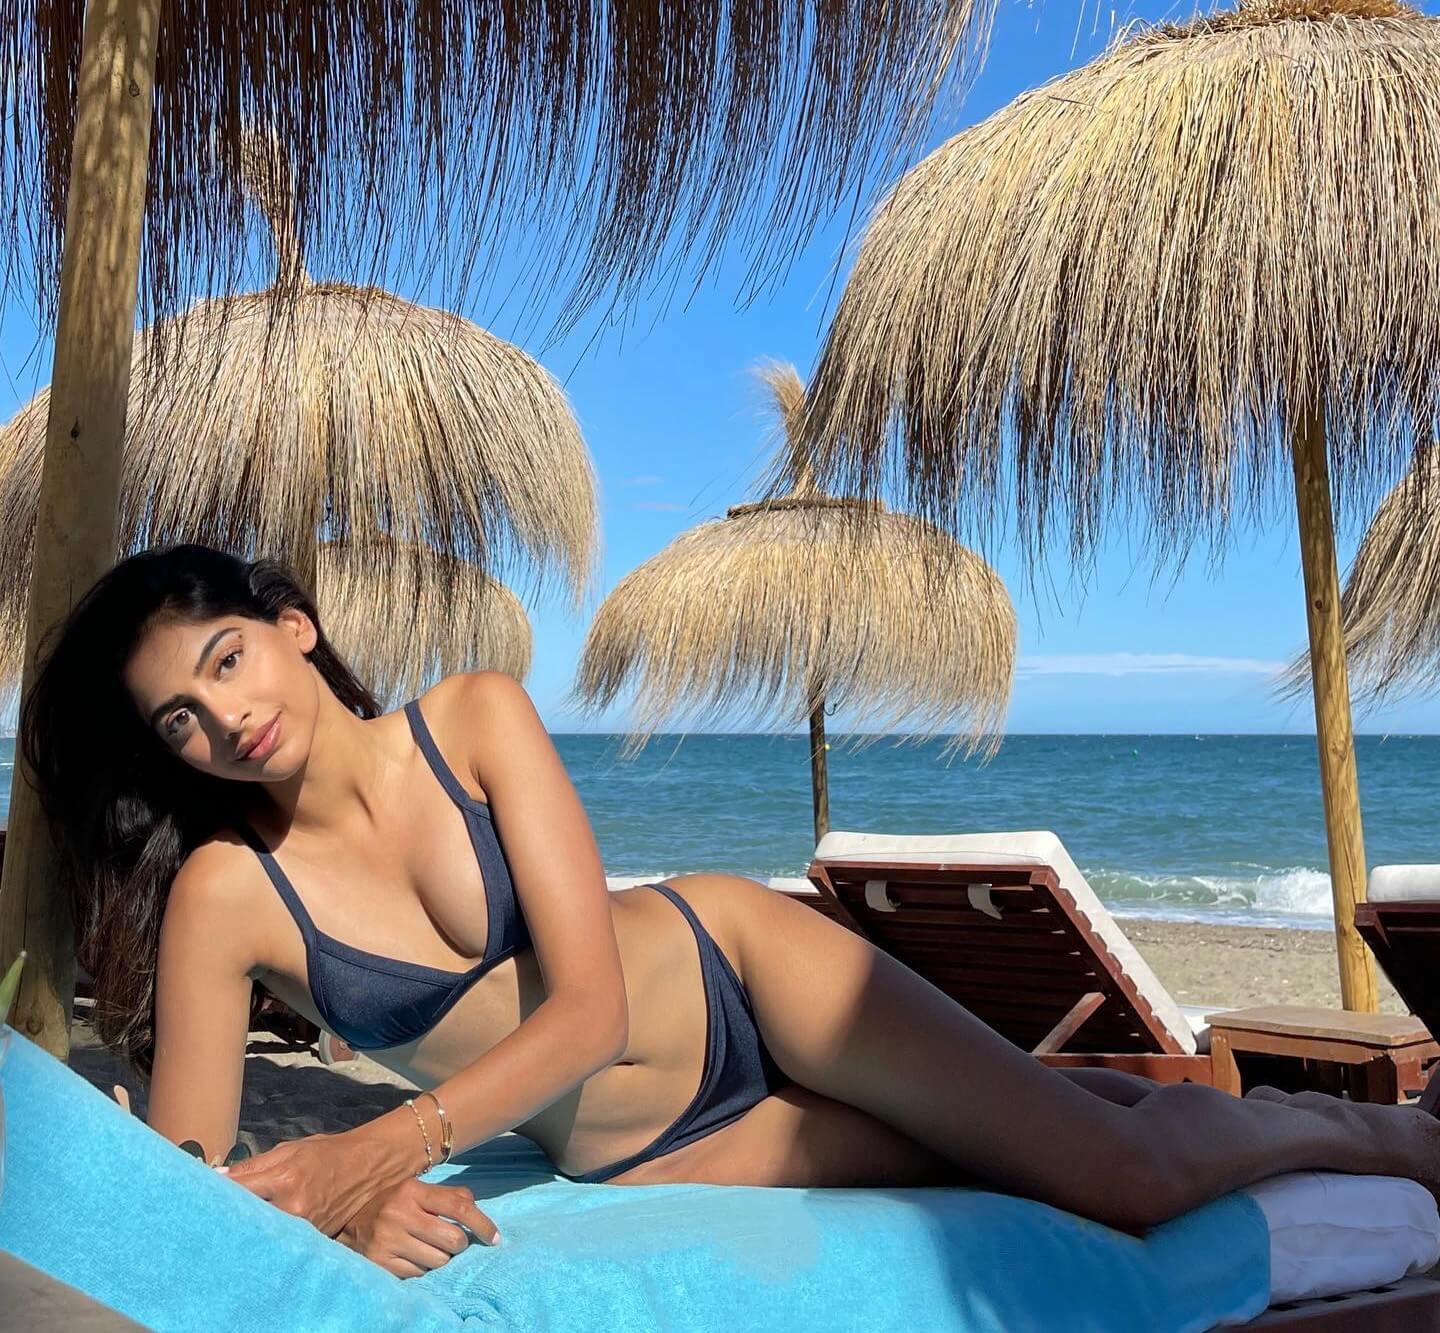 Beach Girl Banita Sandhu Enjoying Her Holidays In Spain Wearing Black Bikini - Glamorous Western Outfits Looks